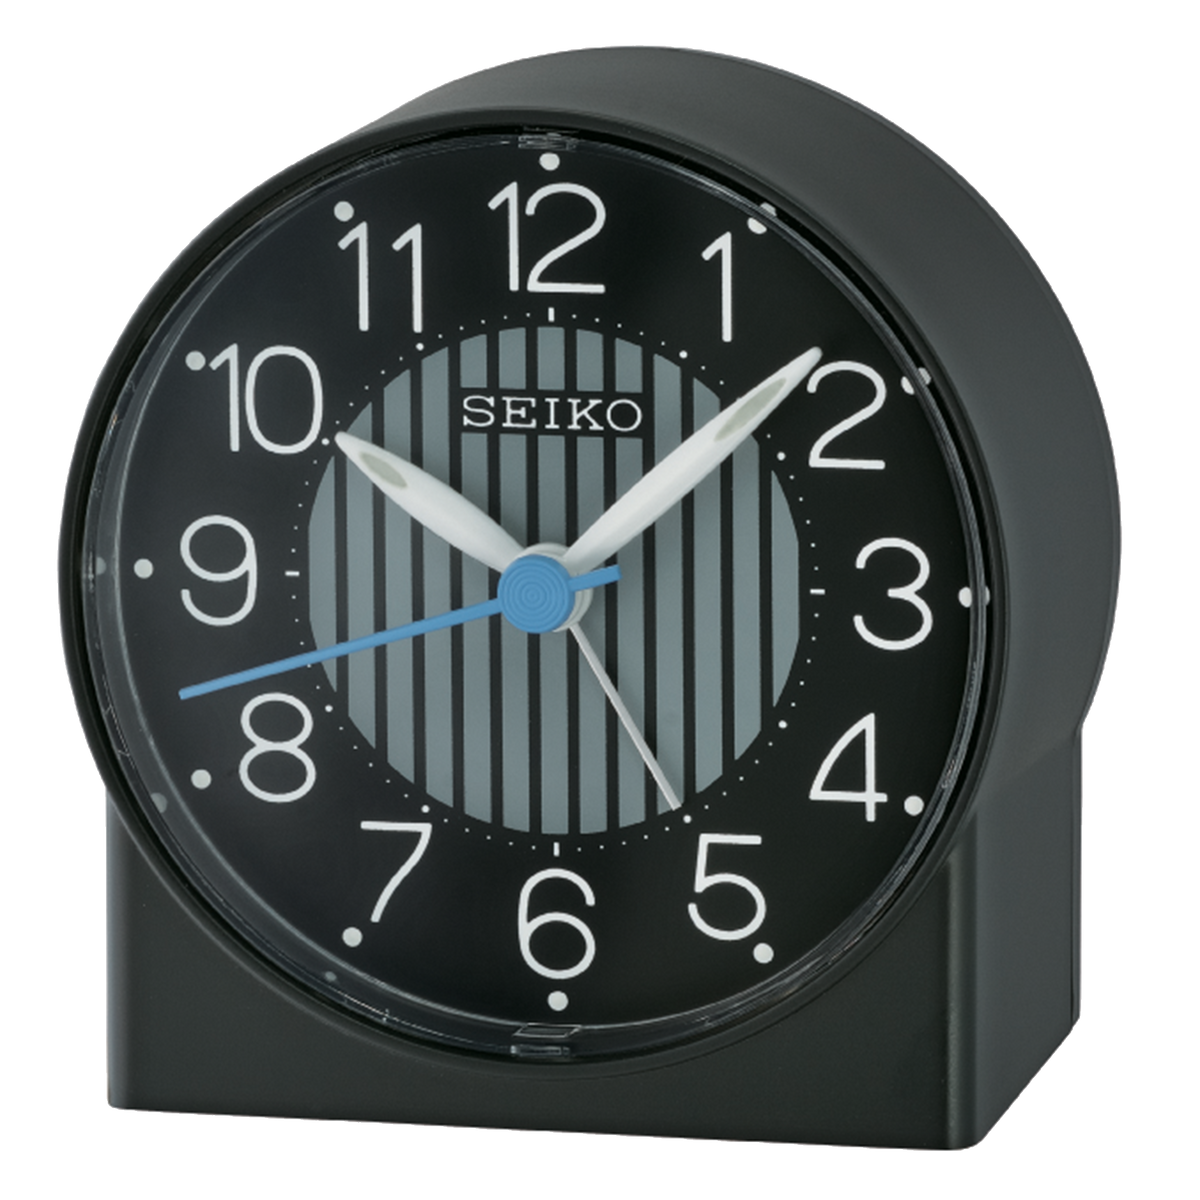 Seiko - Bedside Alarm Clock